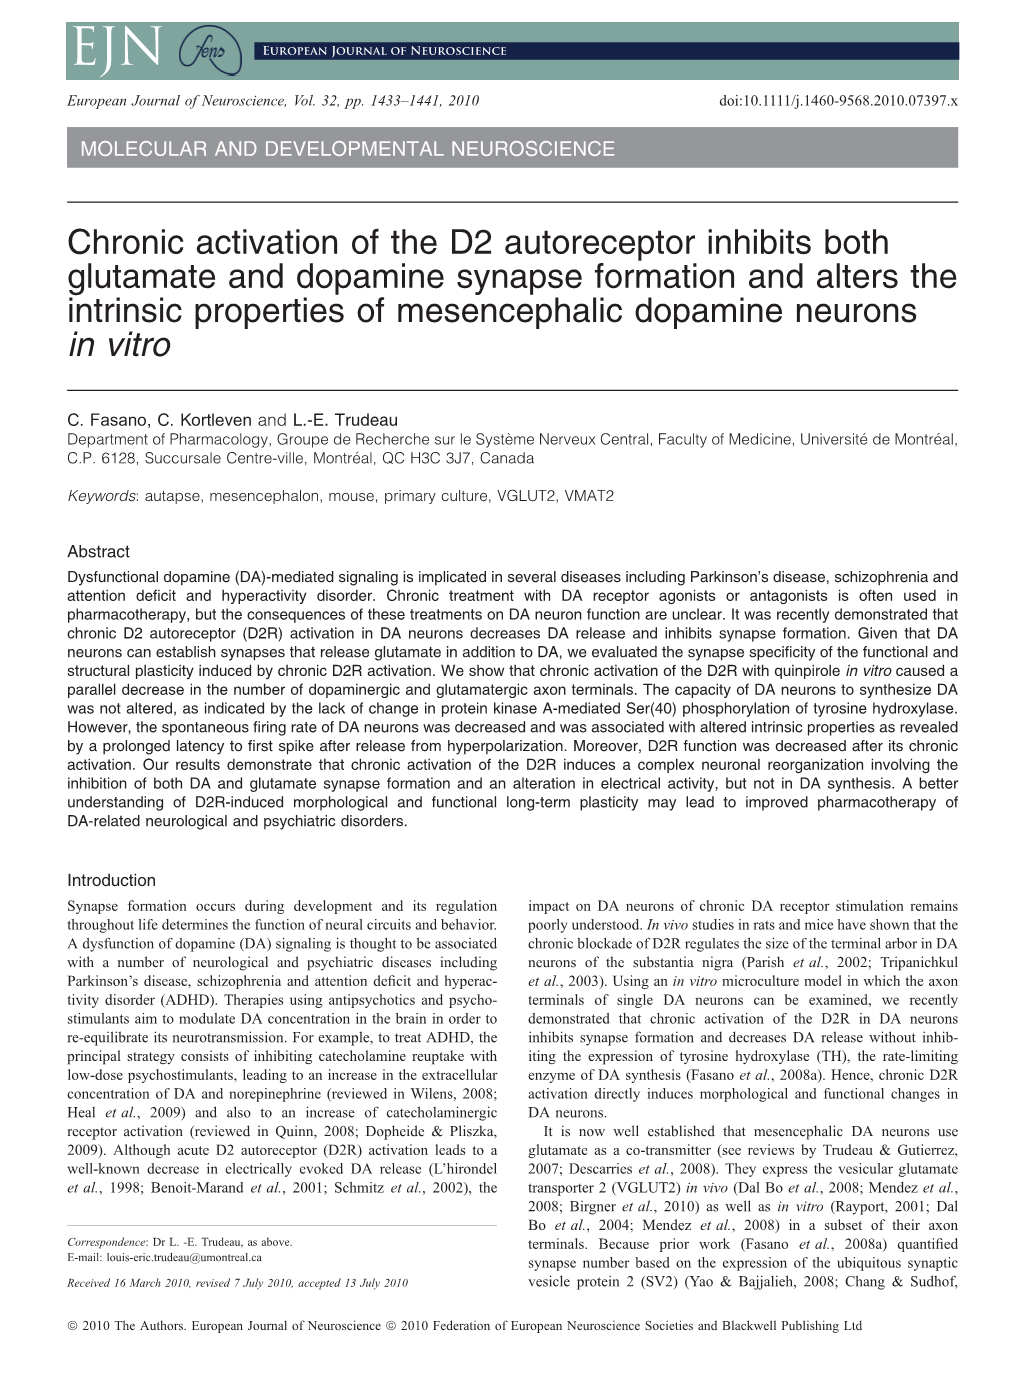 Chronic Activation of the D2 Autoreceptor Inhibits Both Glutamate